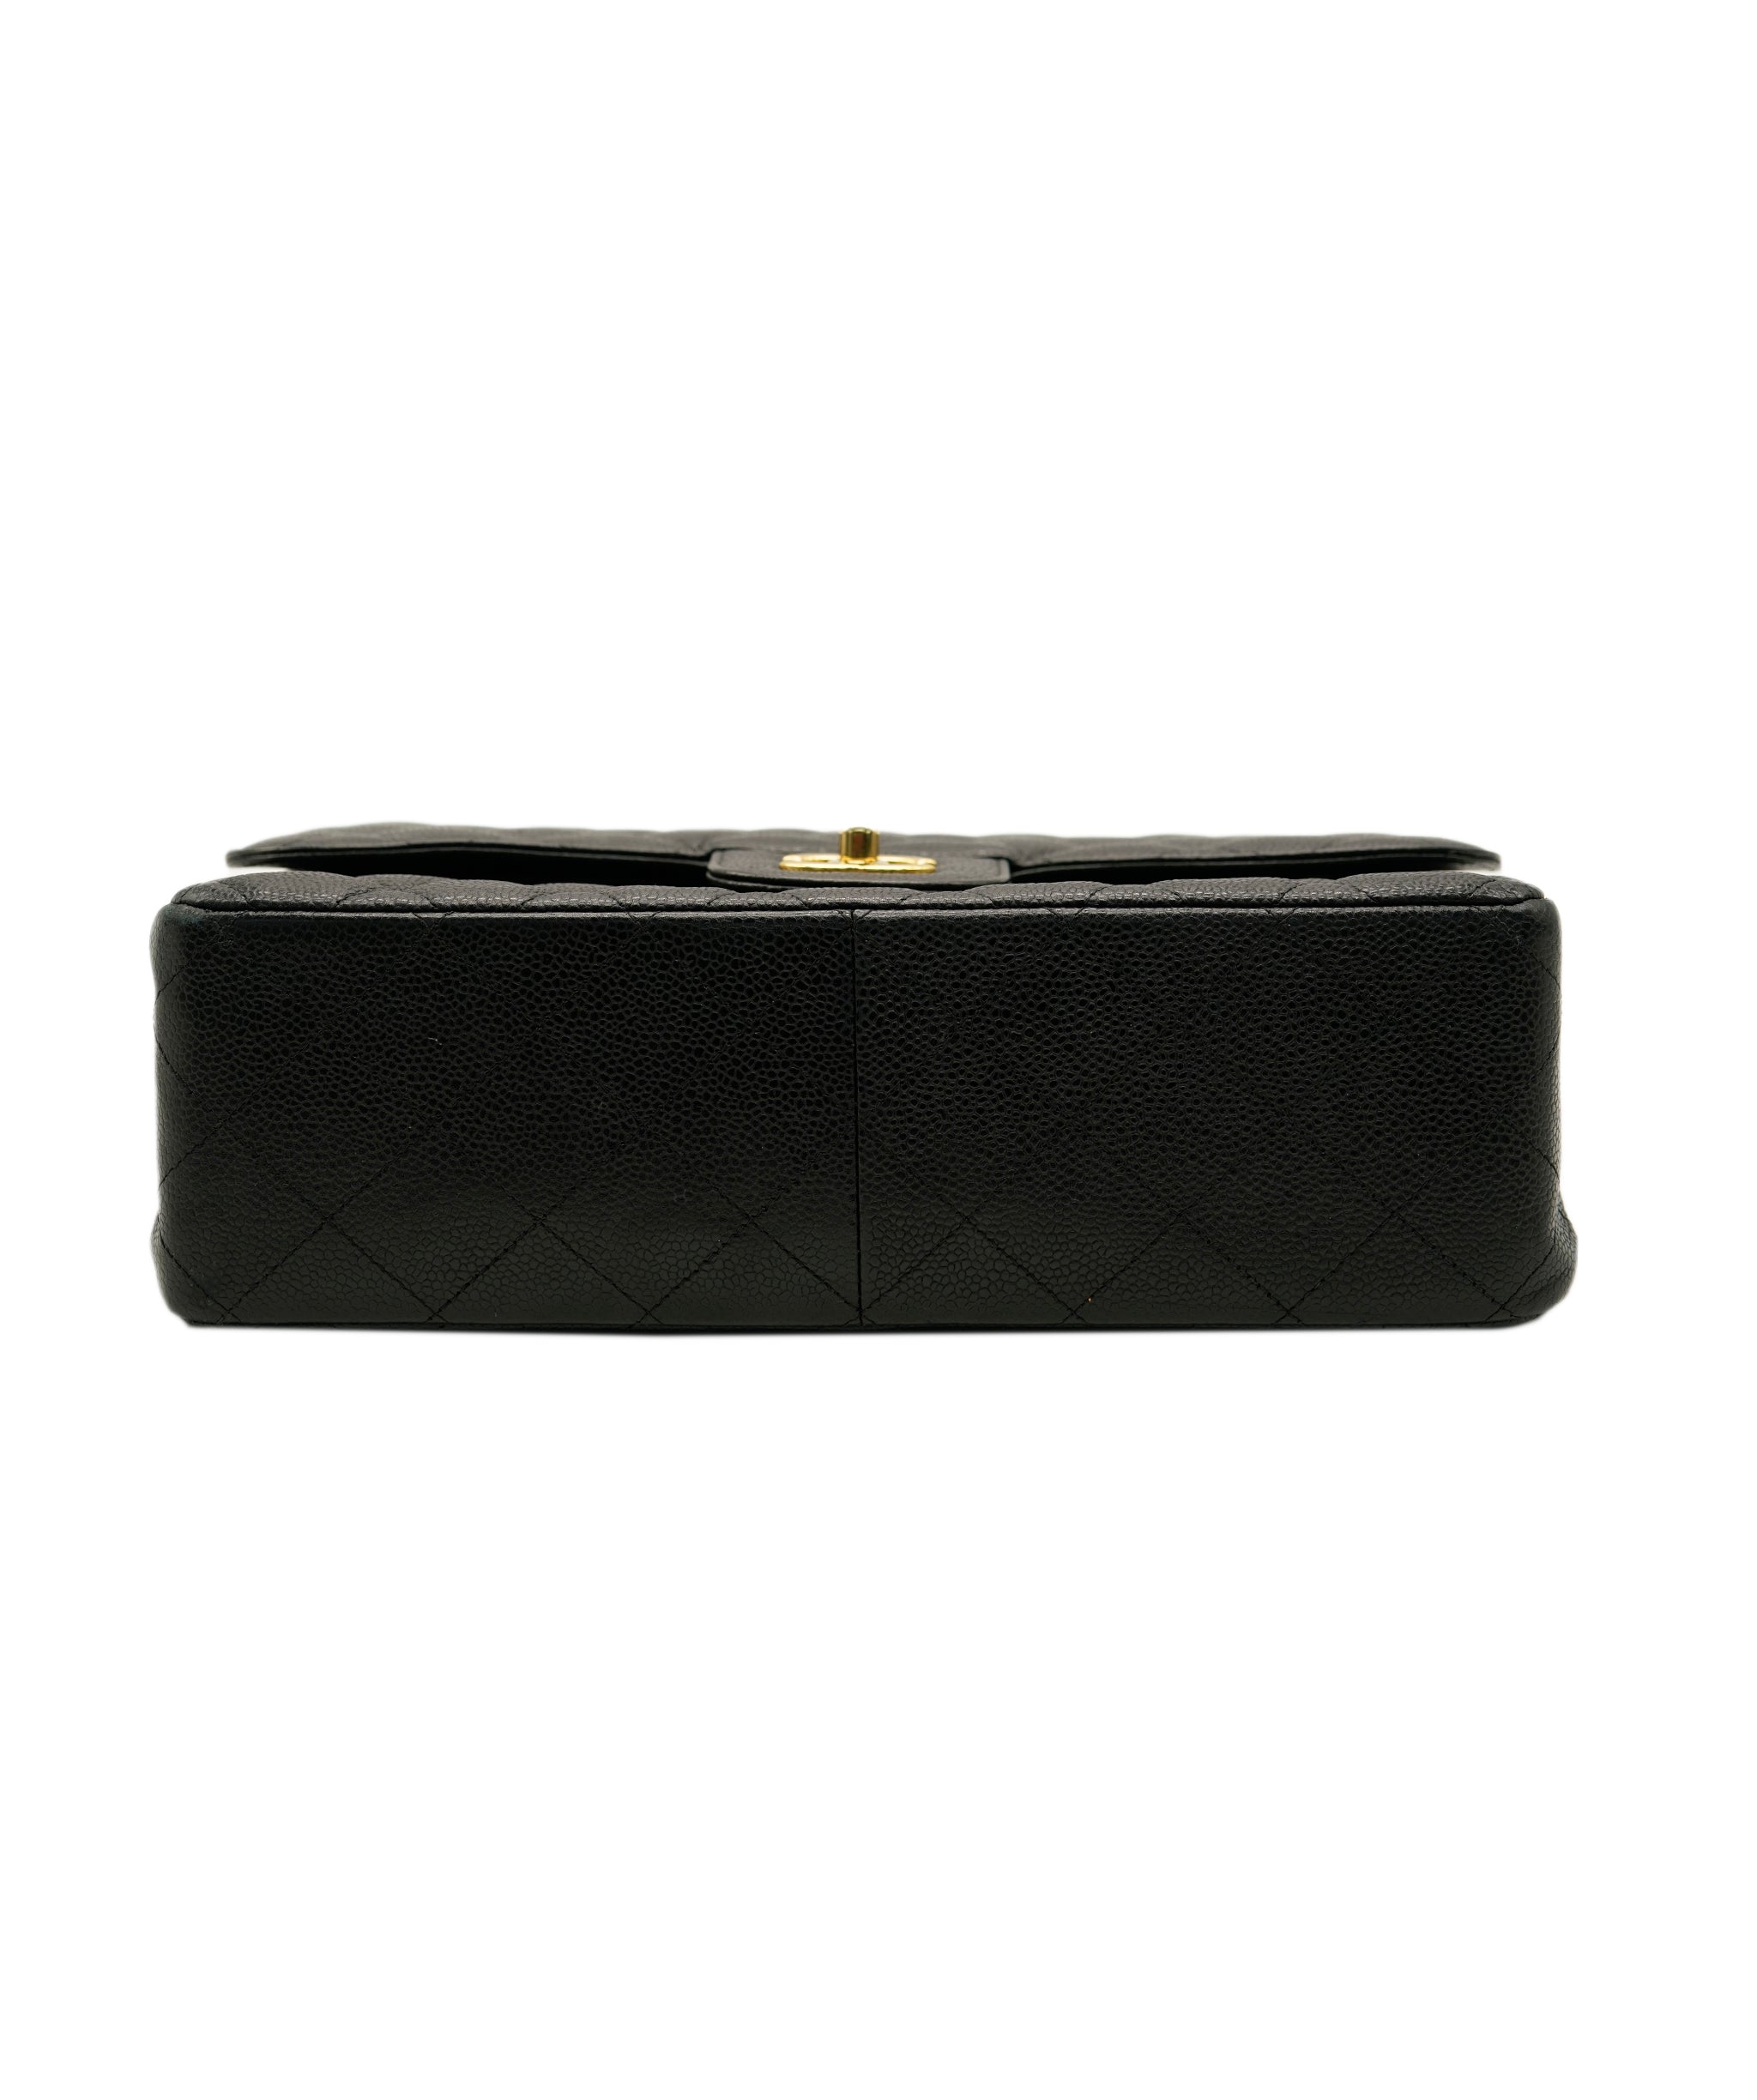 Chanel Chanel black caviar jumbo, with gold hardware ASL5178